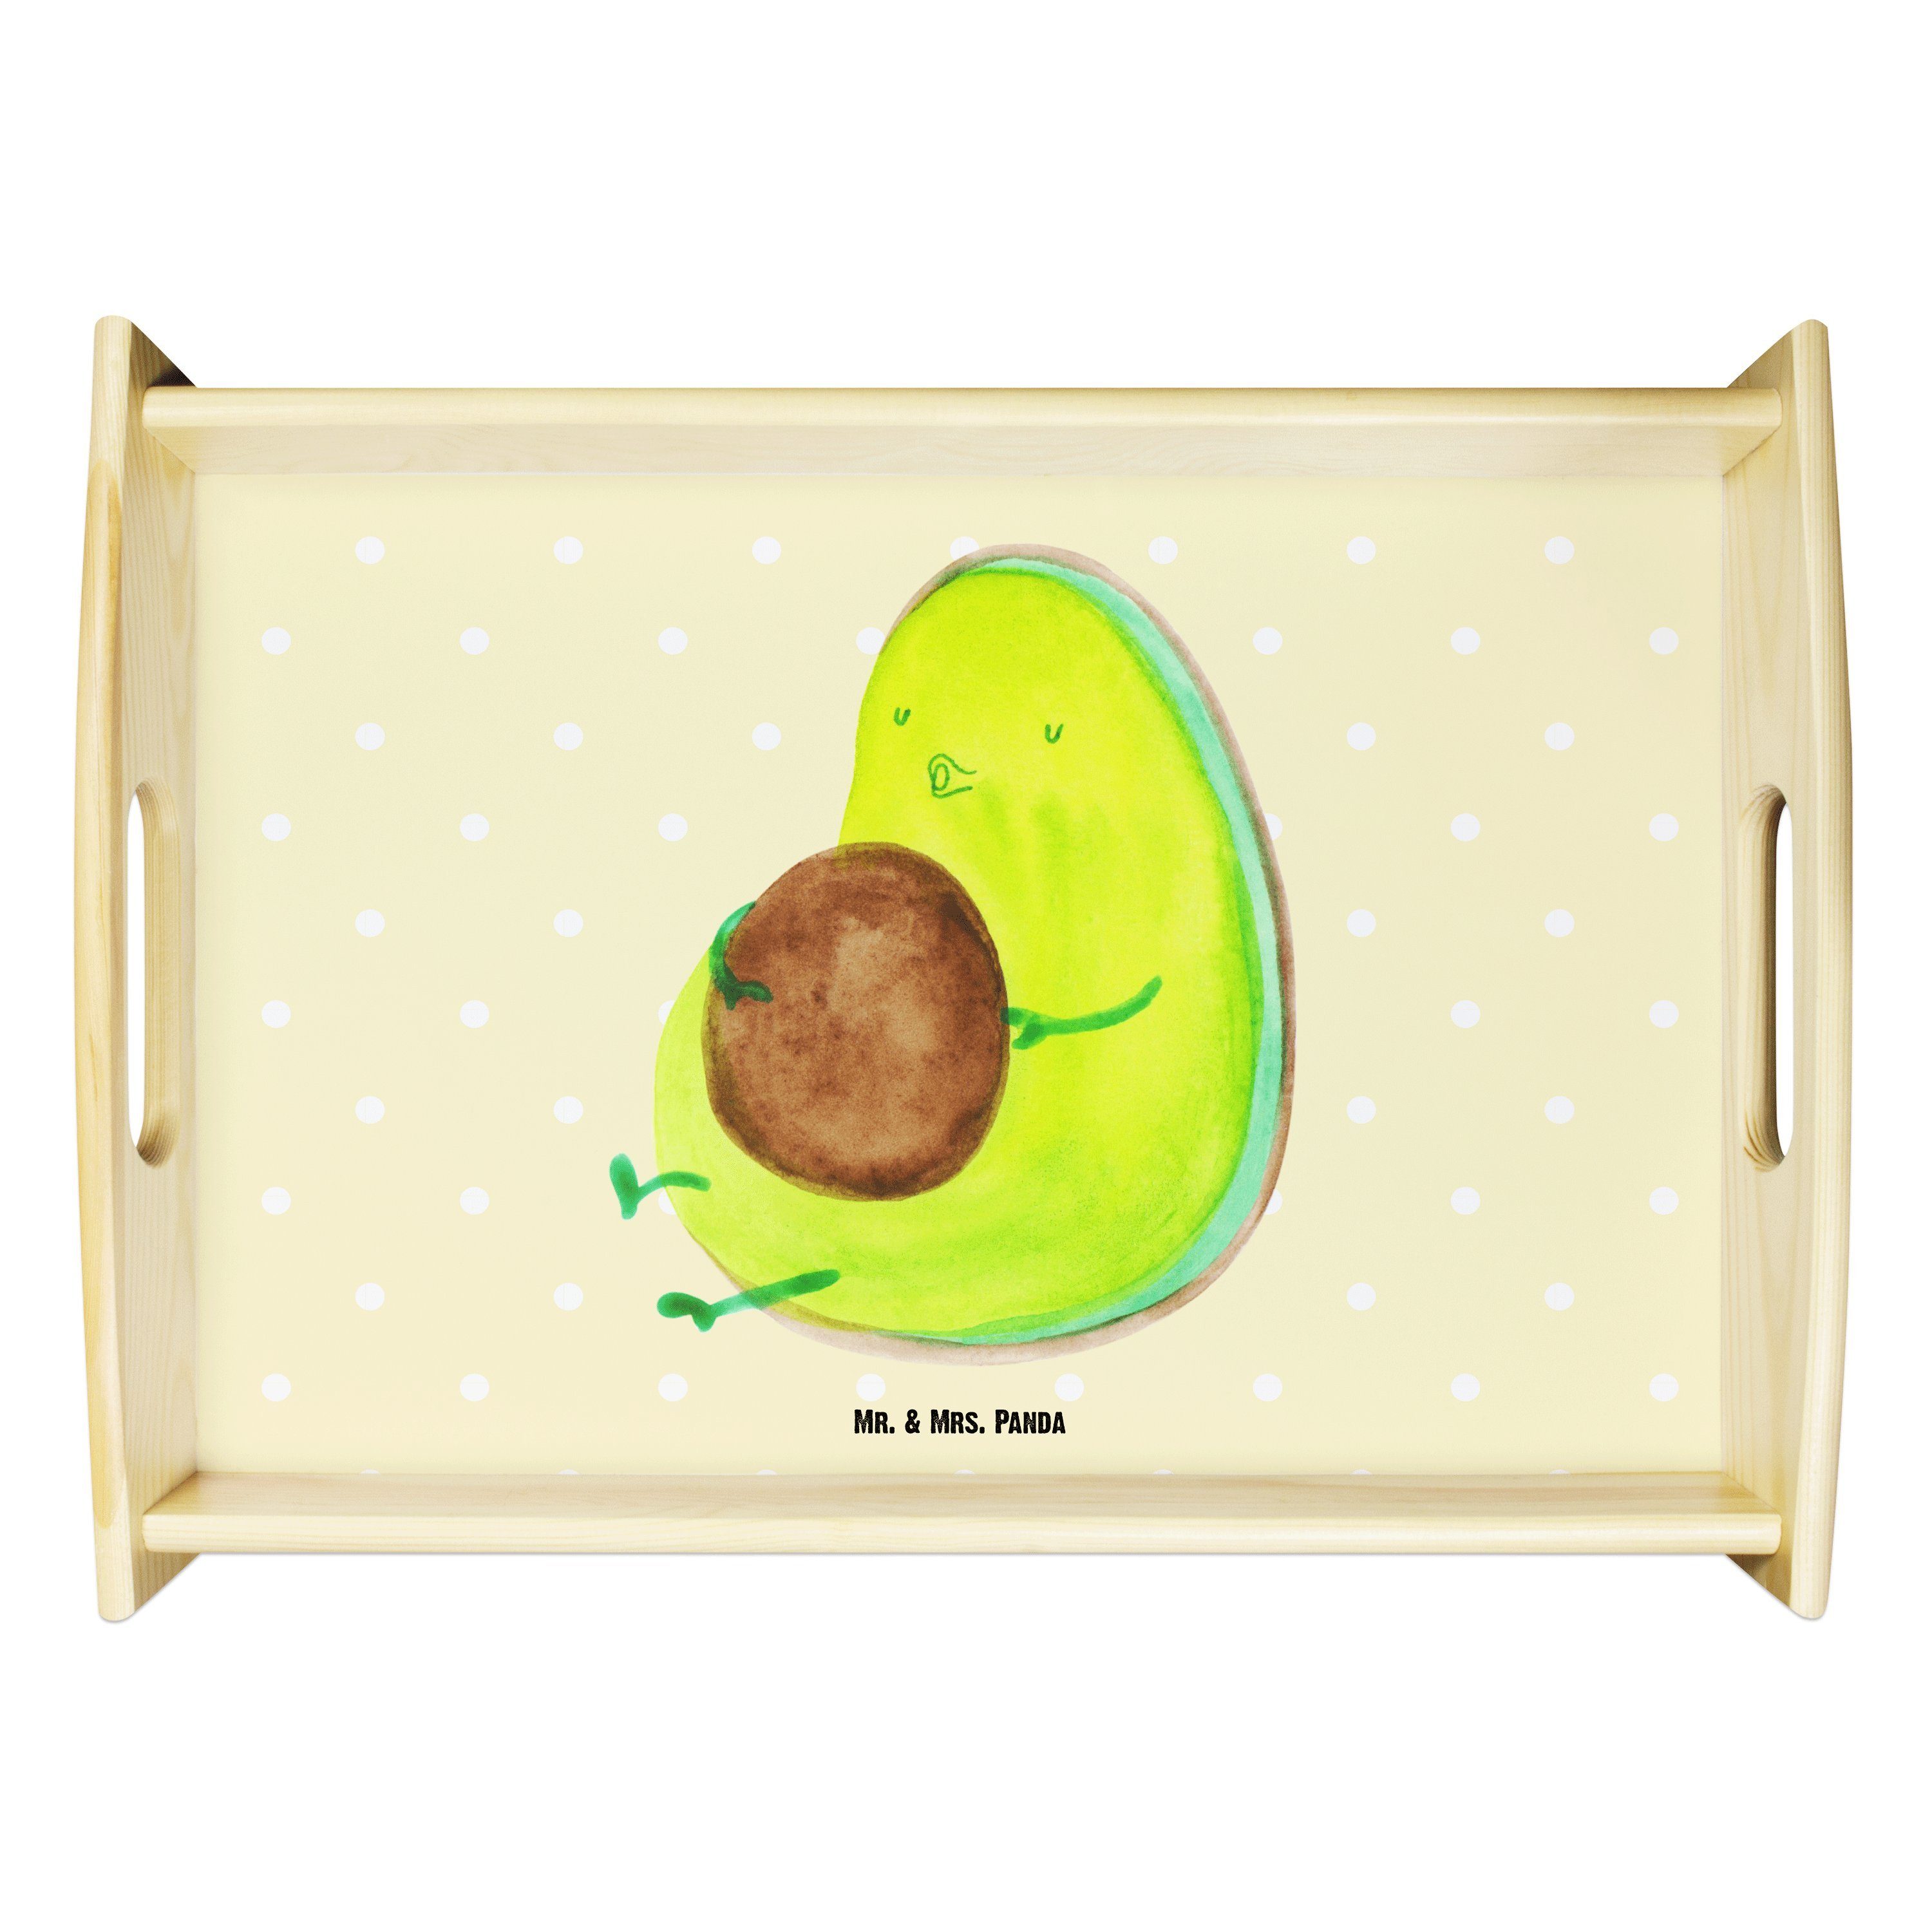 Mr. & Mrs. Panda Tablett Avocado pfeift - Gelb Pastell - Geschenk, schwanger, Veggie, Dekotabl, Echtholz lasiert, (1-tlg)